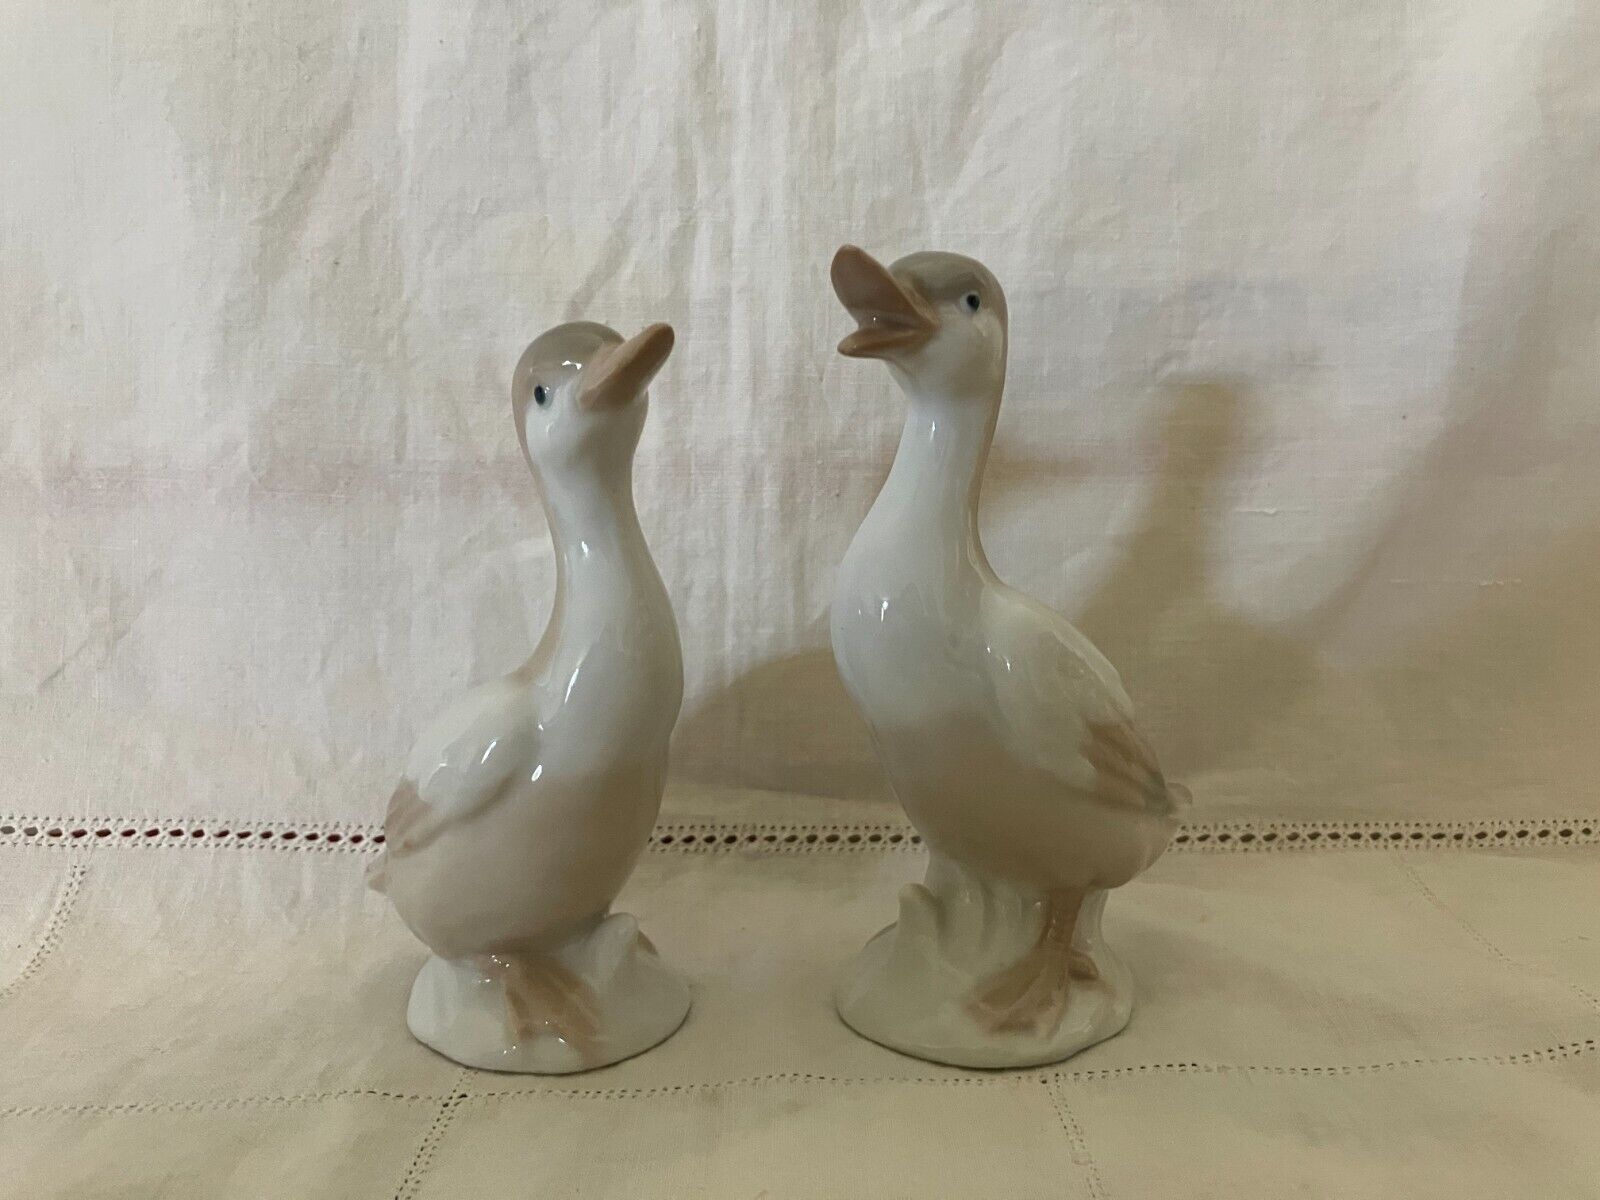 Glass ducks